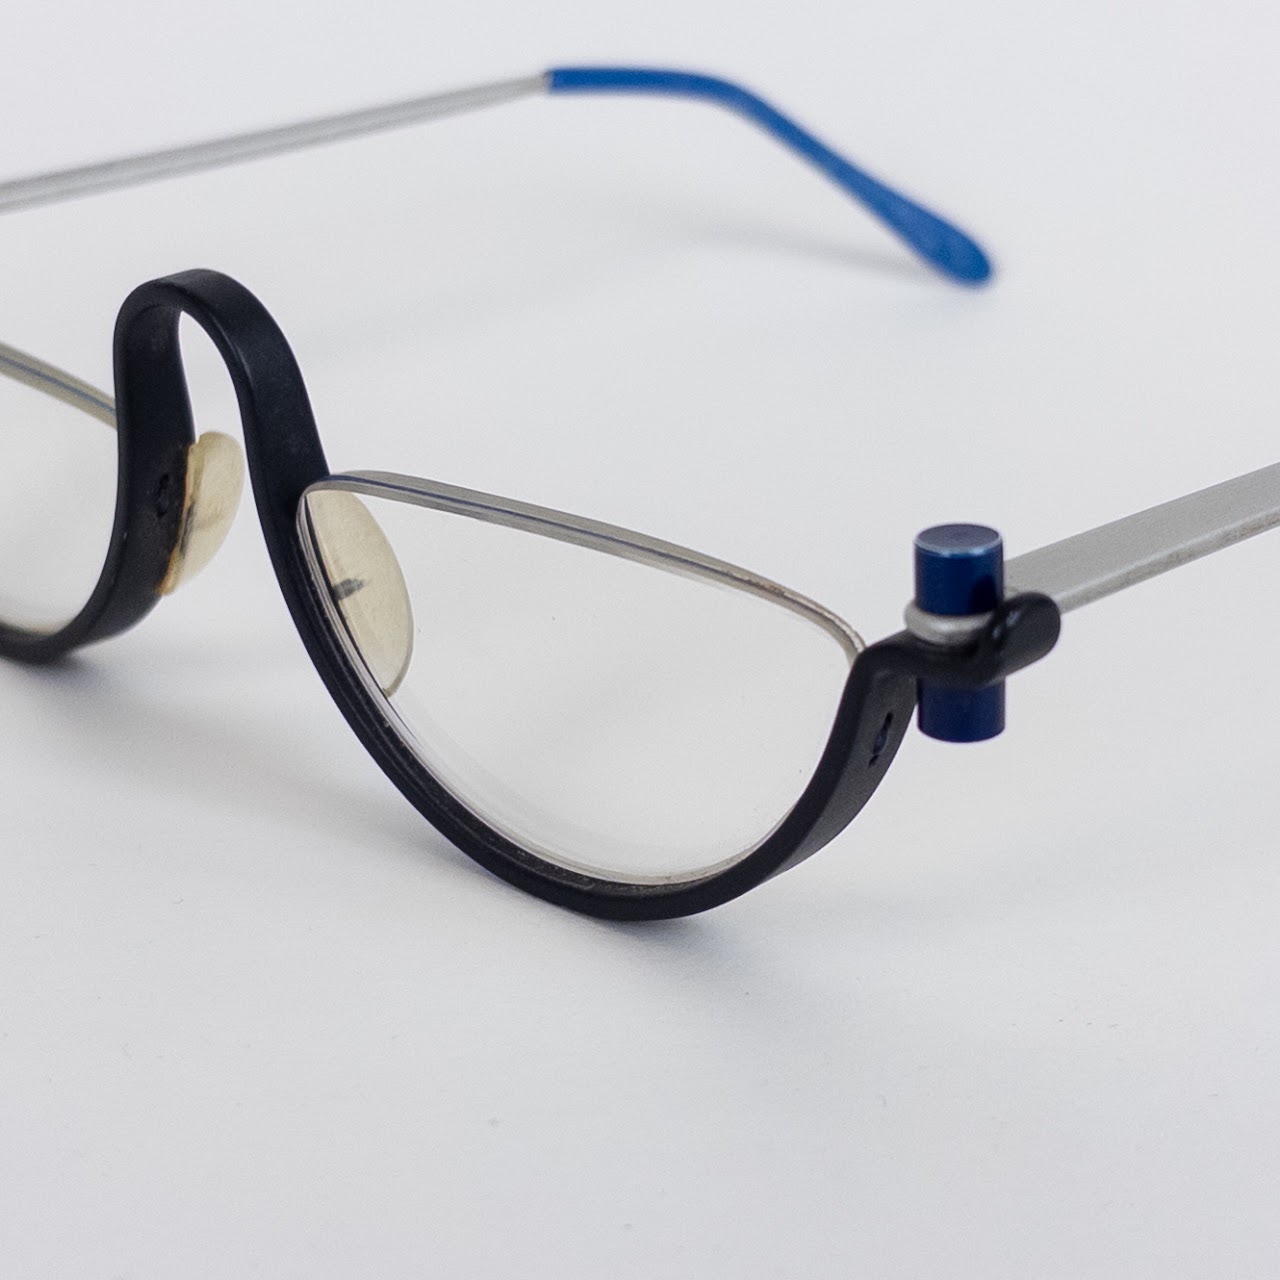 Gail Spence Design No. One Reader Glasses